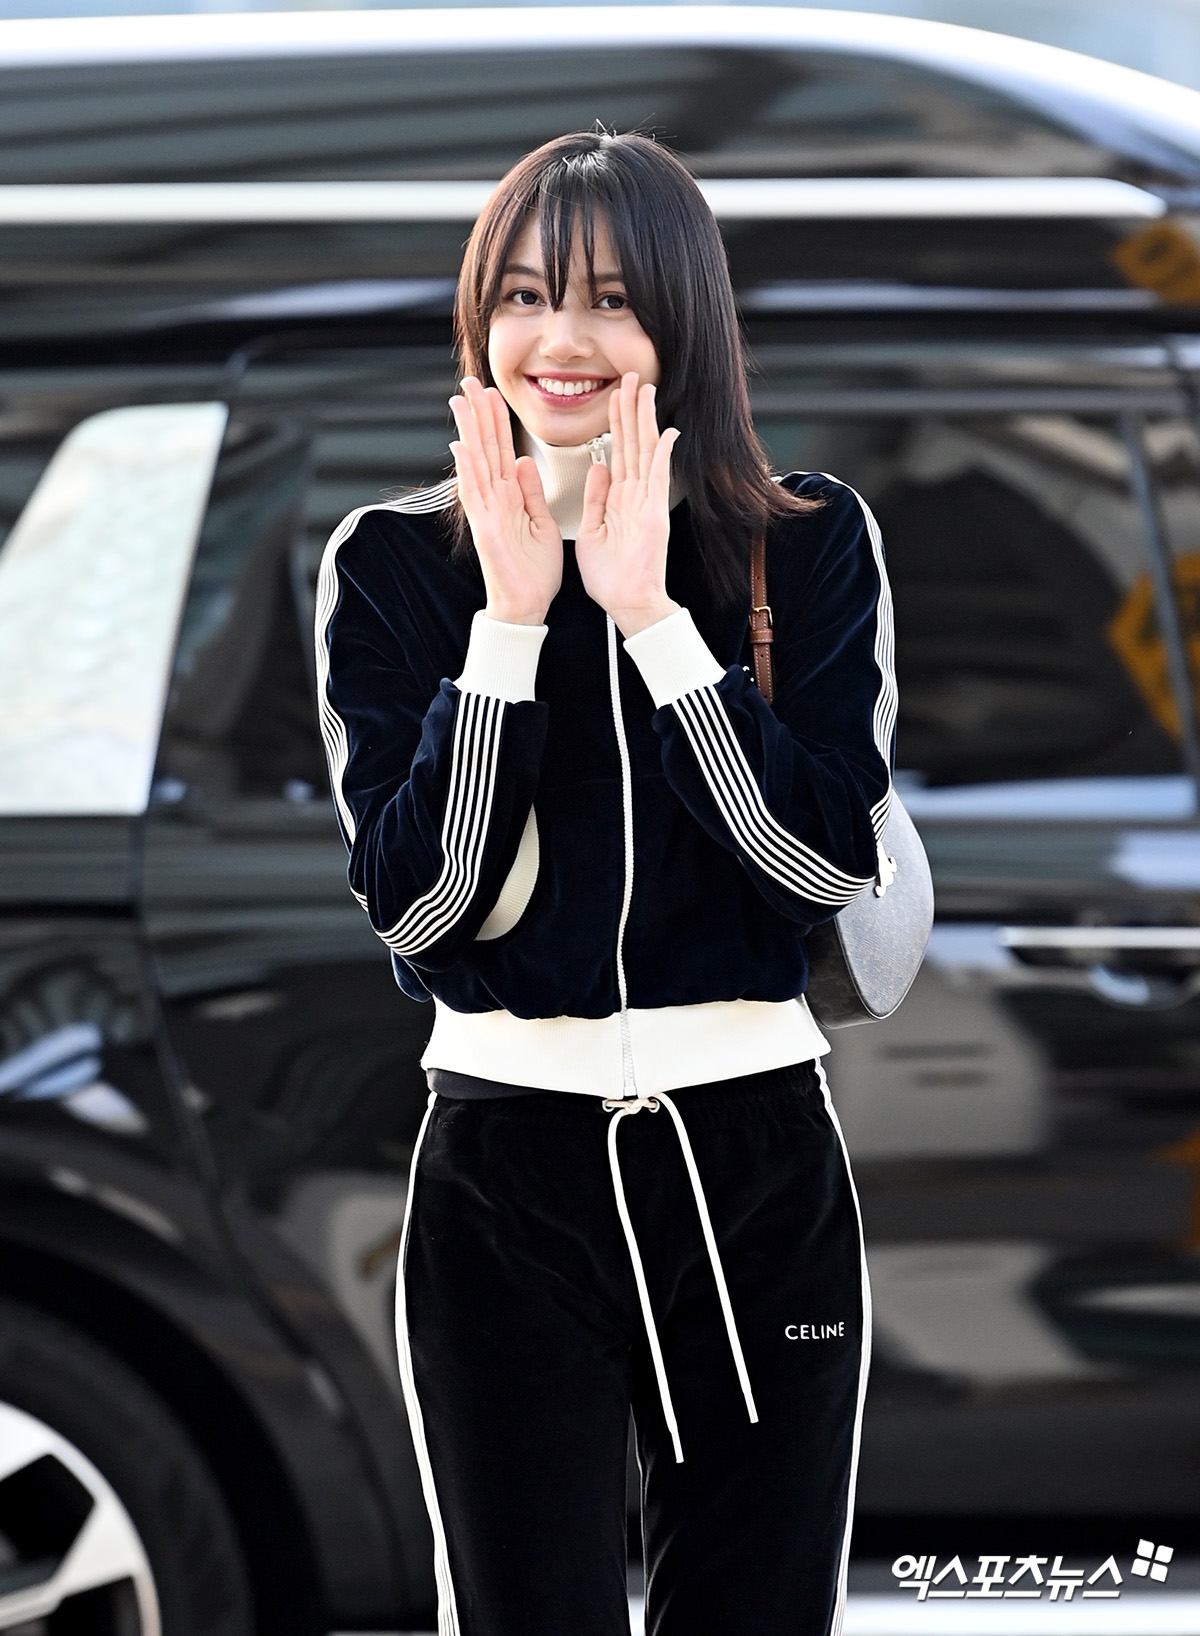 「BLACKPINK YG再契約」リサ、ファンの呼びかけに太陽のような笑顔で応える【PHOTO】 